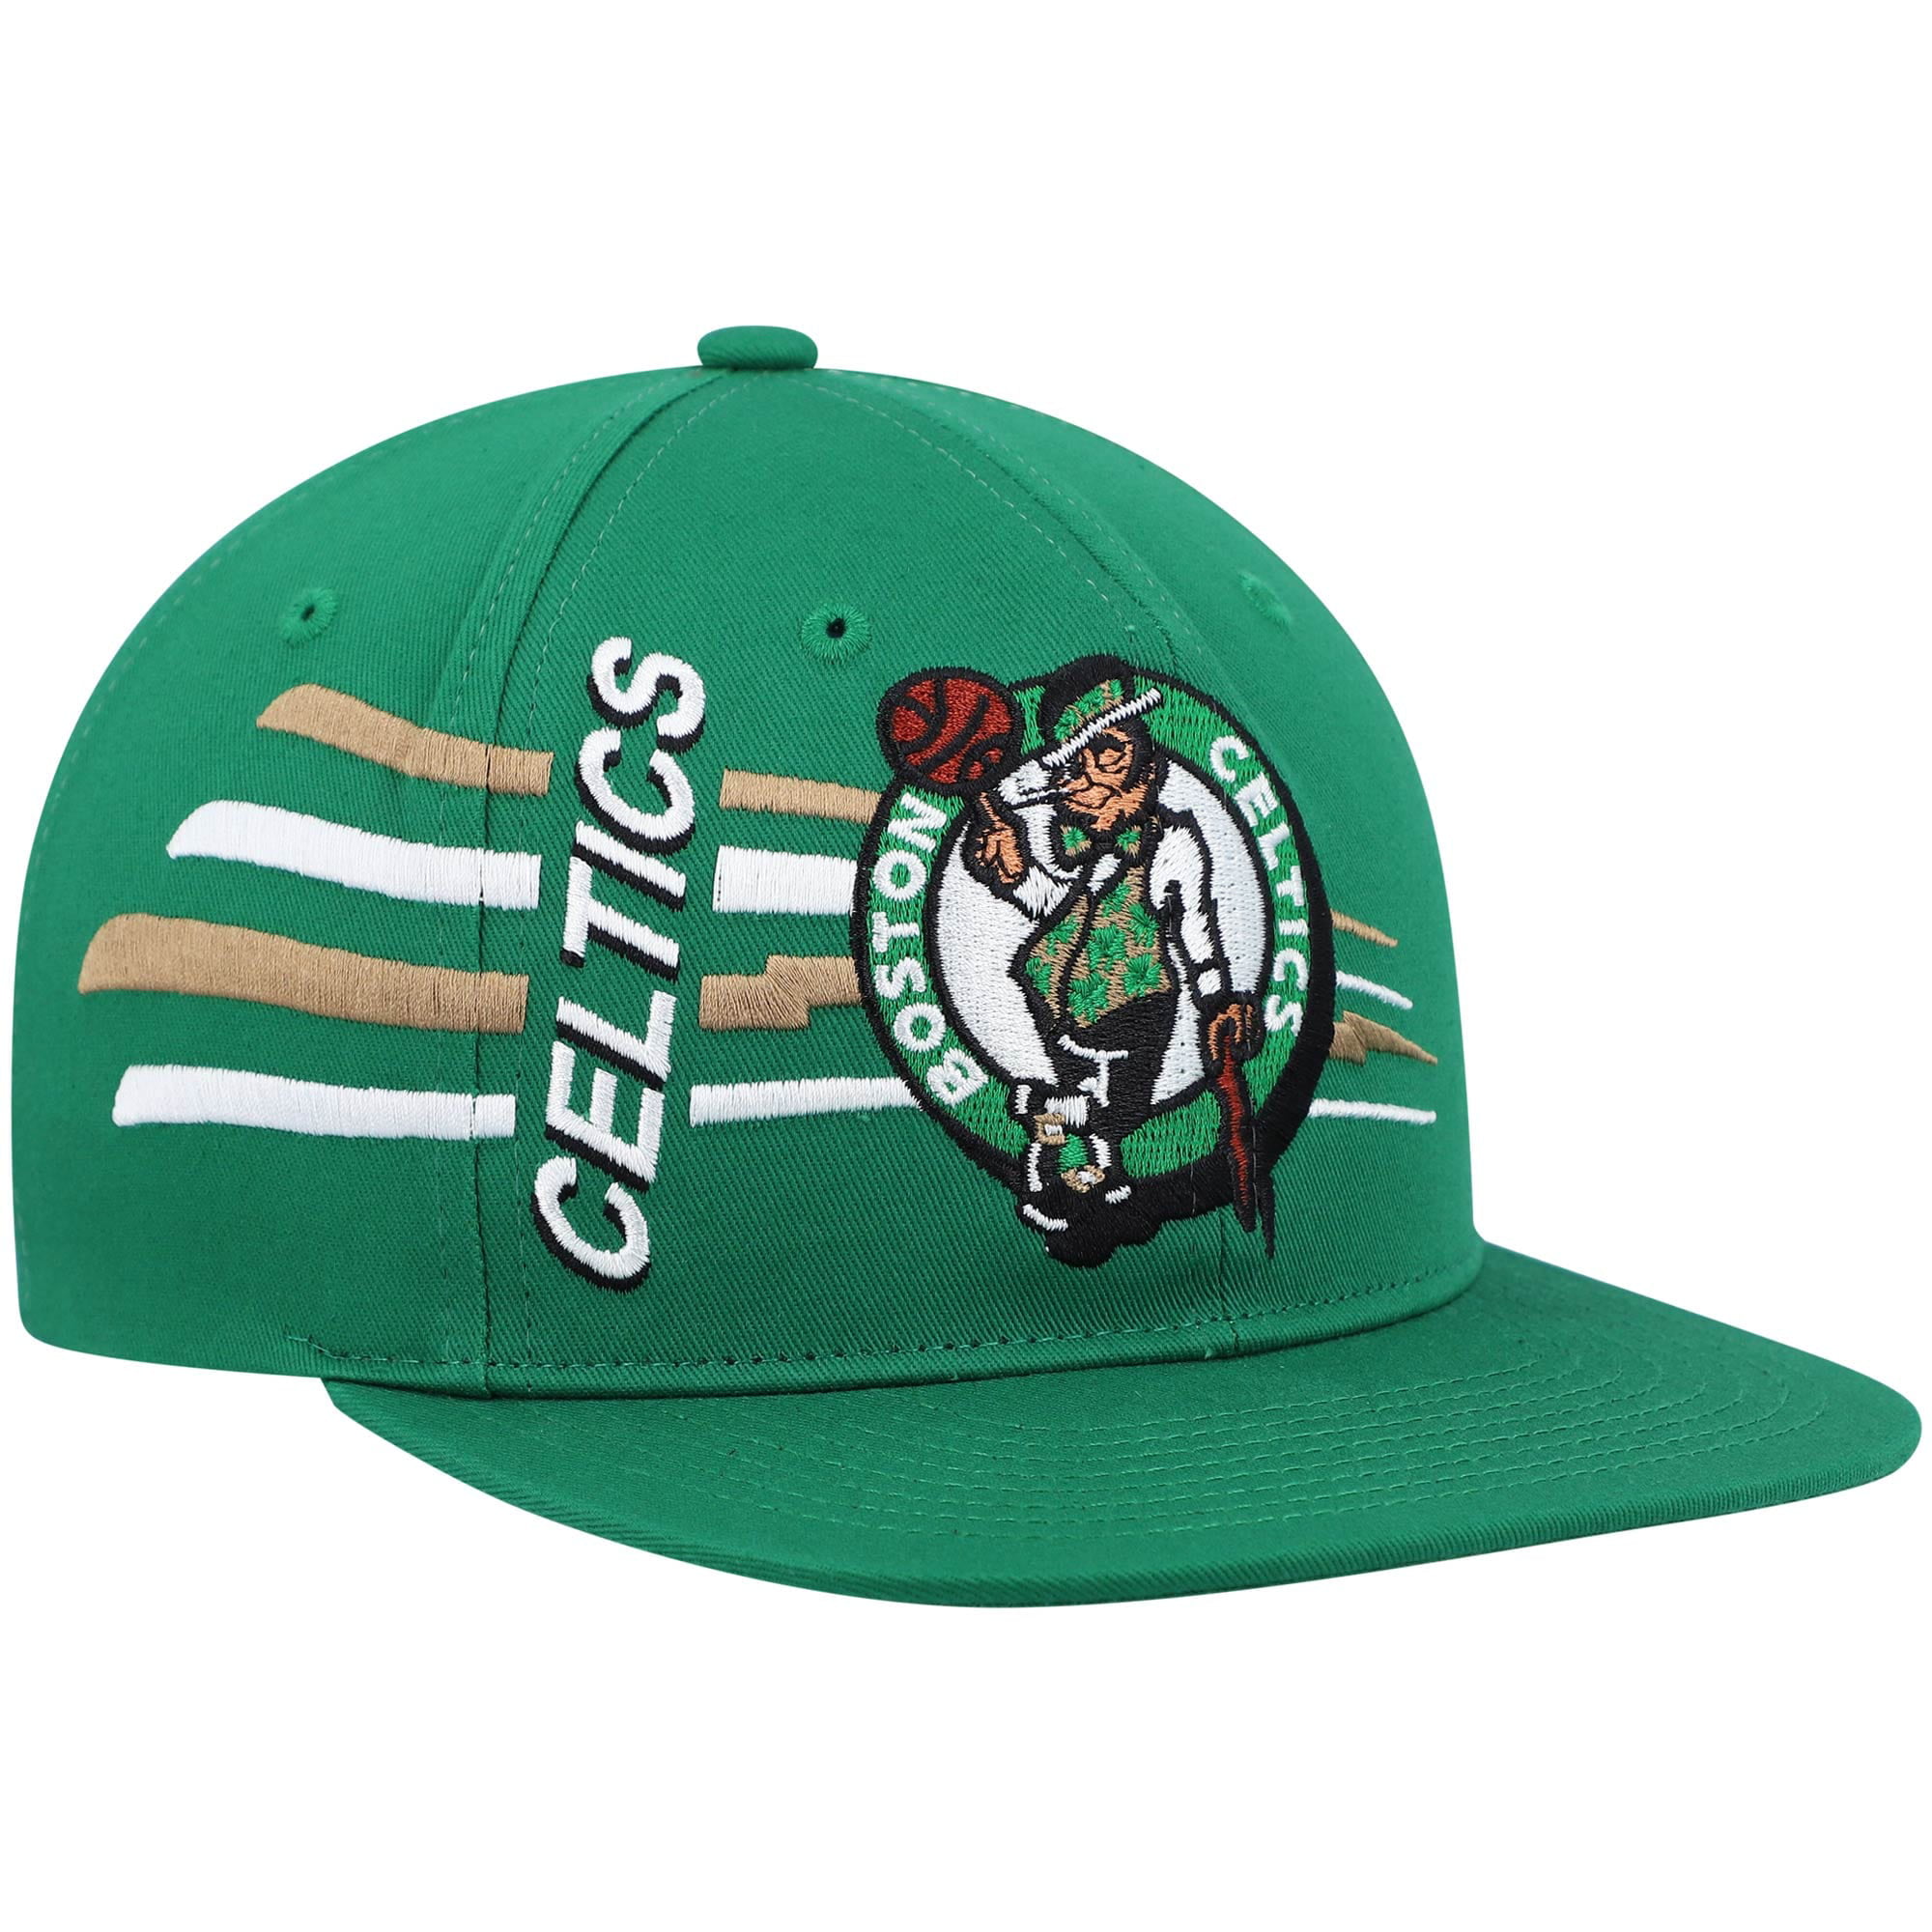 Mitchell & Ness Nba Boston Celtics Paintbrush Snapback Cap in Green for Men Mens Accessories Hats 